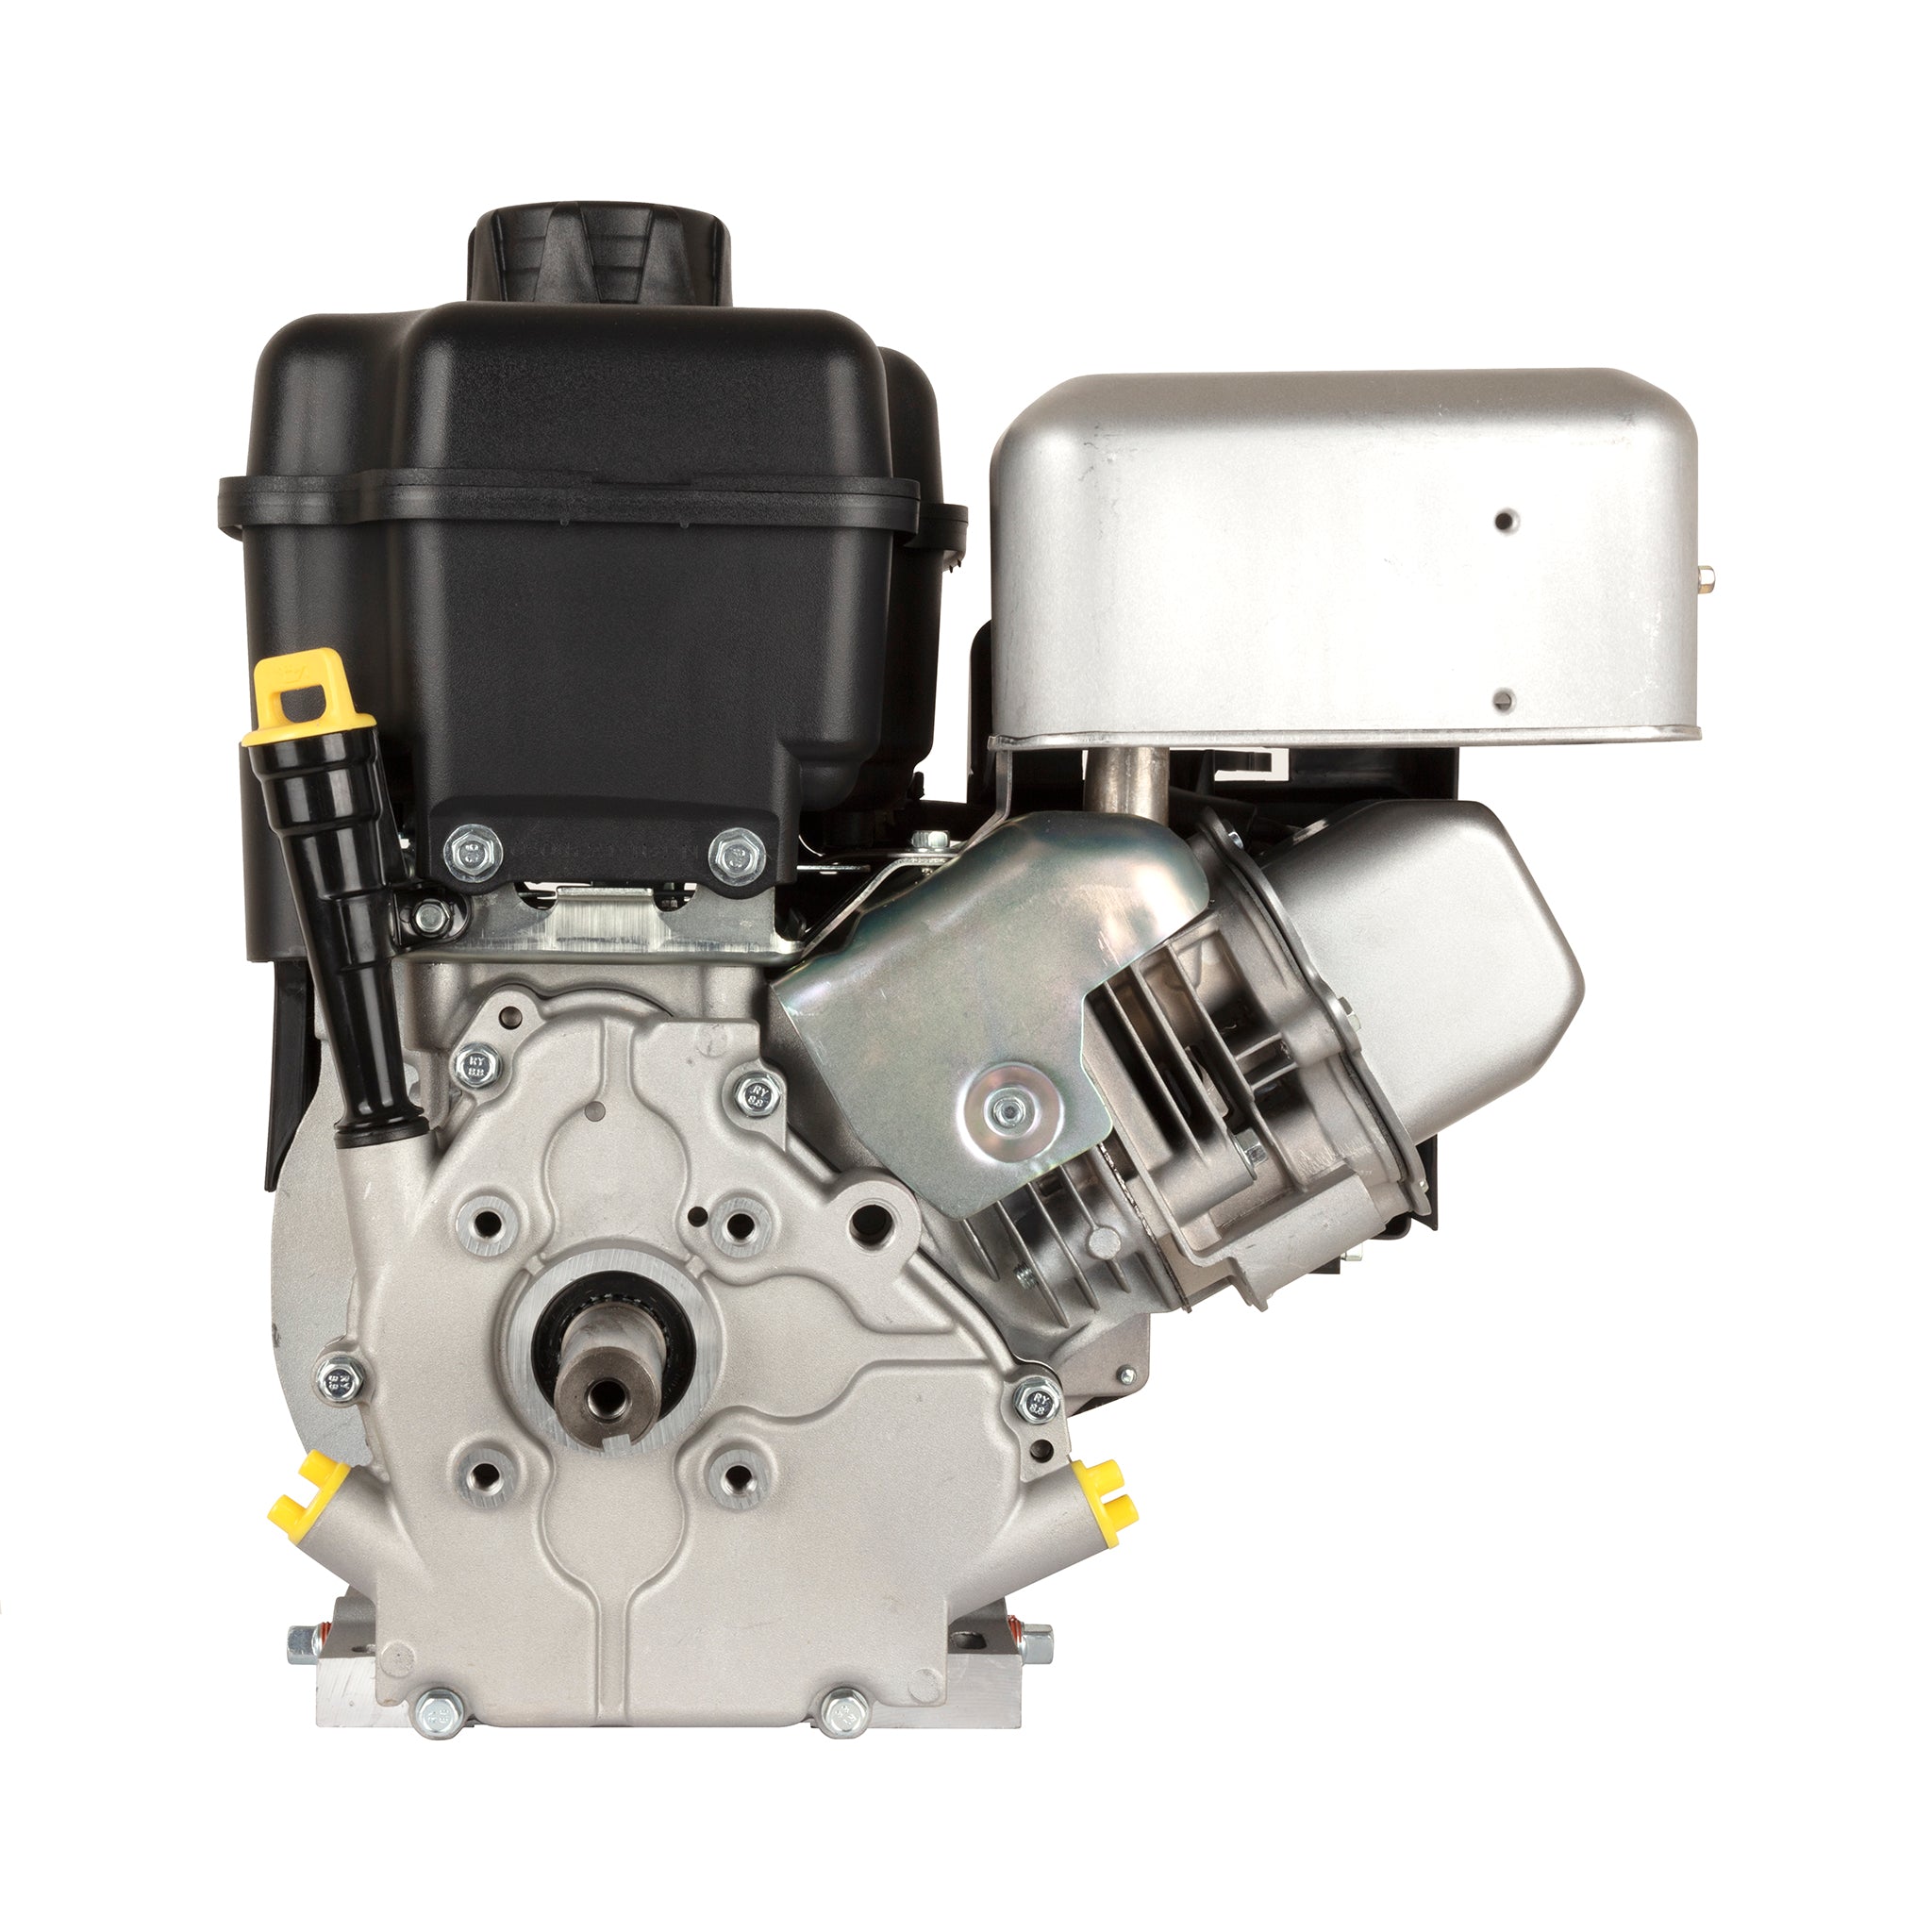 XR1150 Professional Series ™ 250 CC Horizontal Shaft Engine